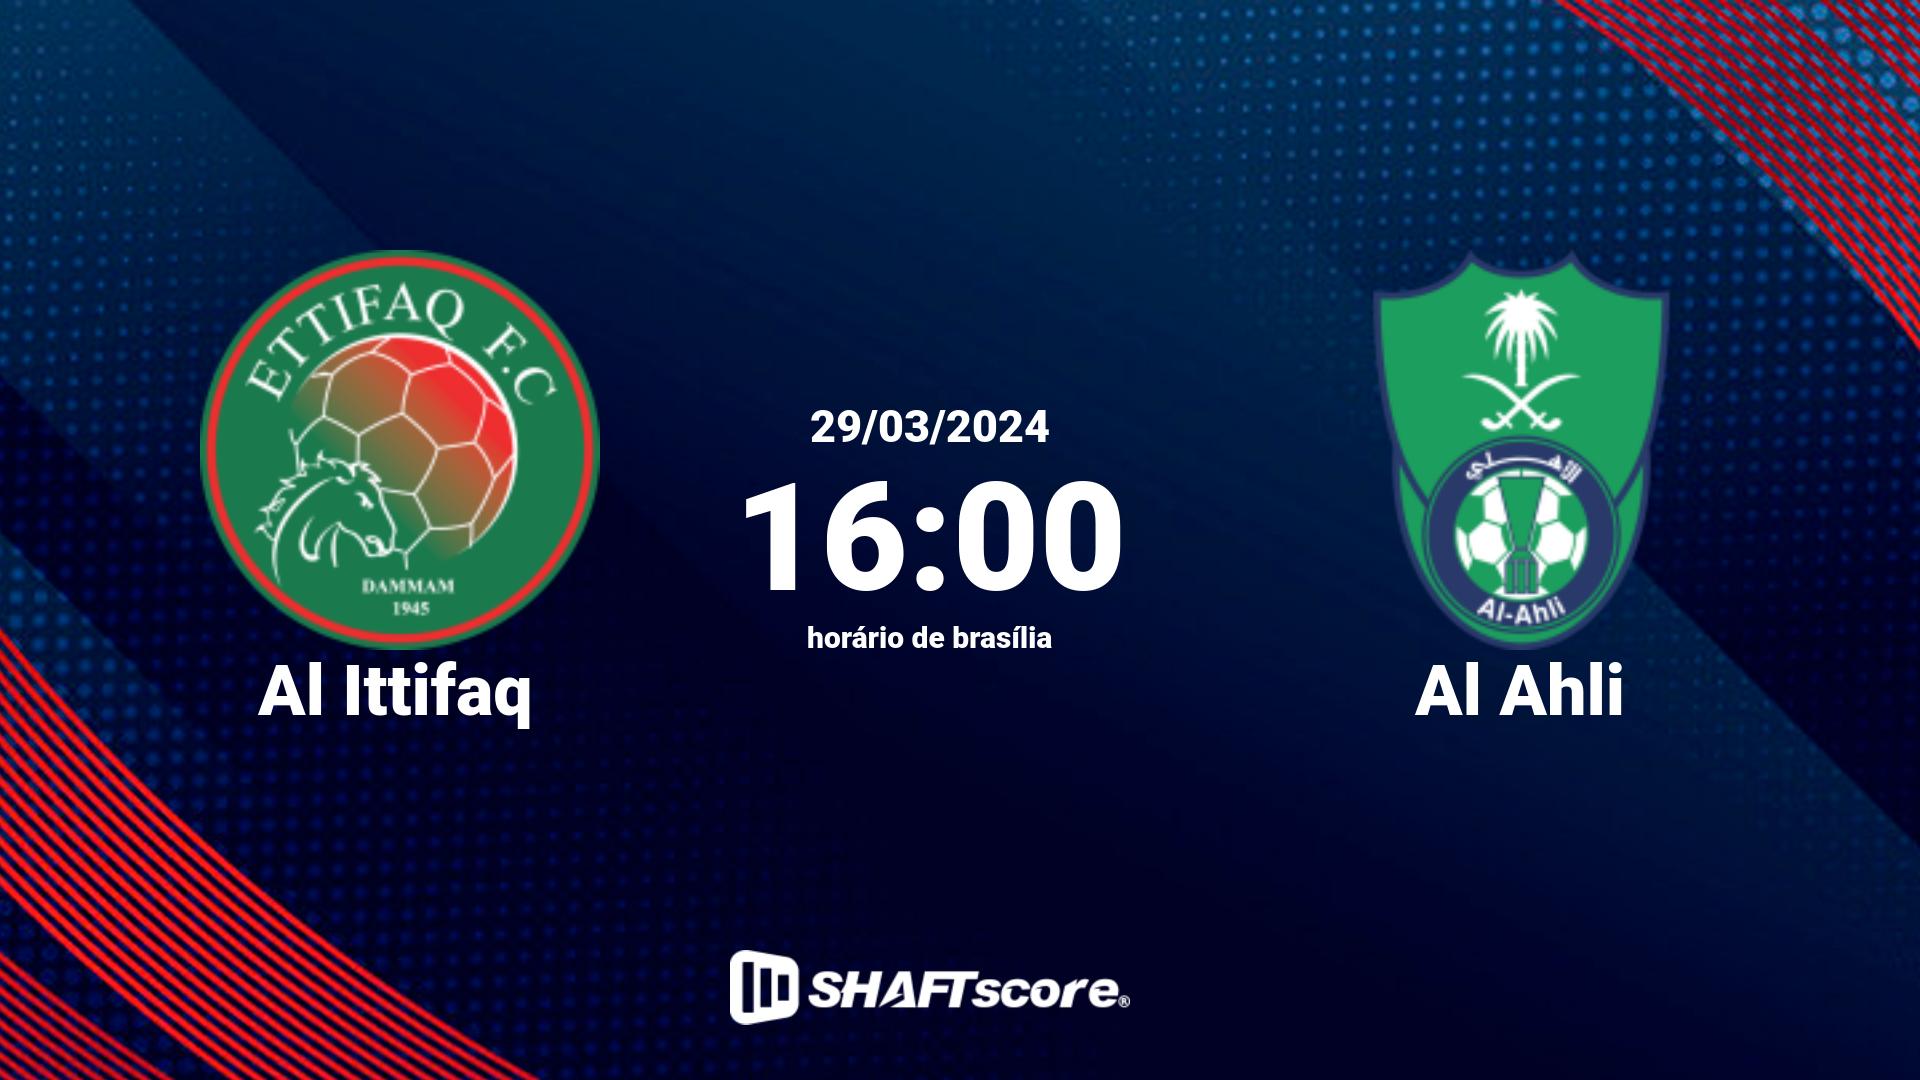 Estatísticas do jogo Al Ittifaq vs Al Ahli 29.03 16:00